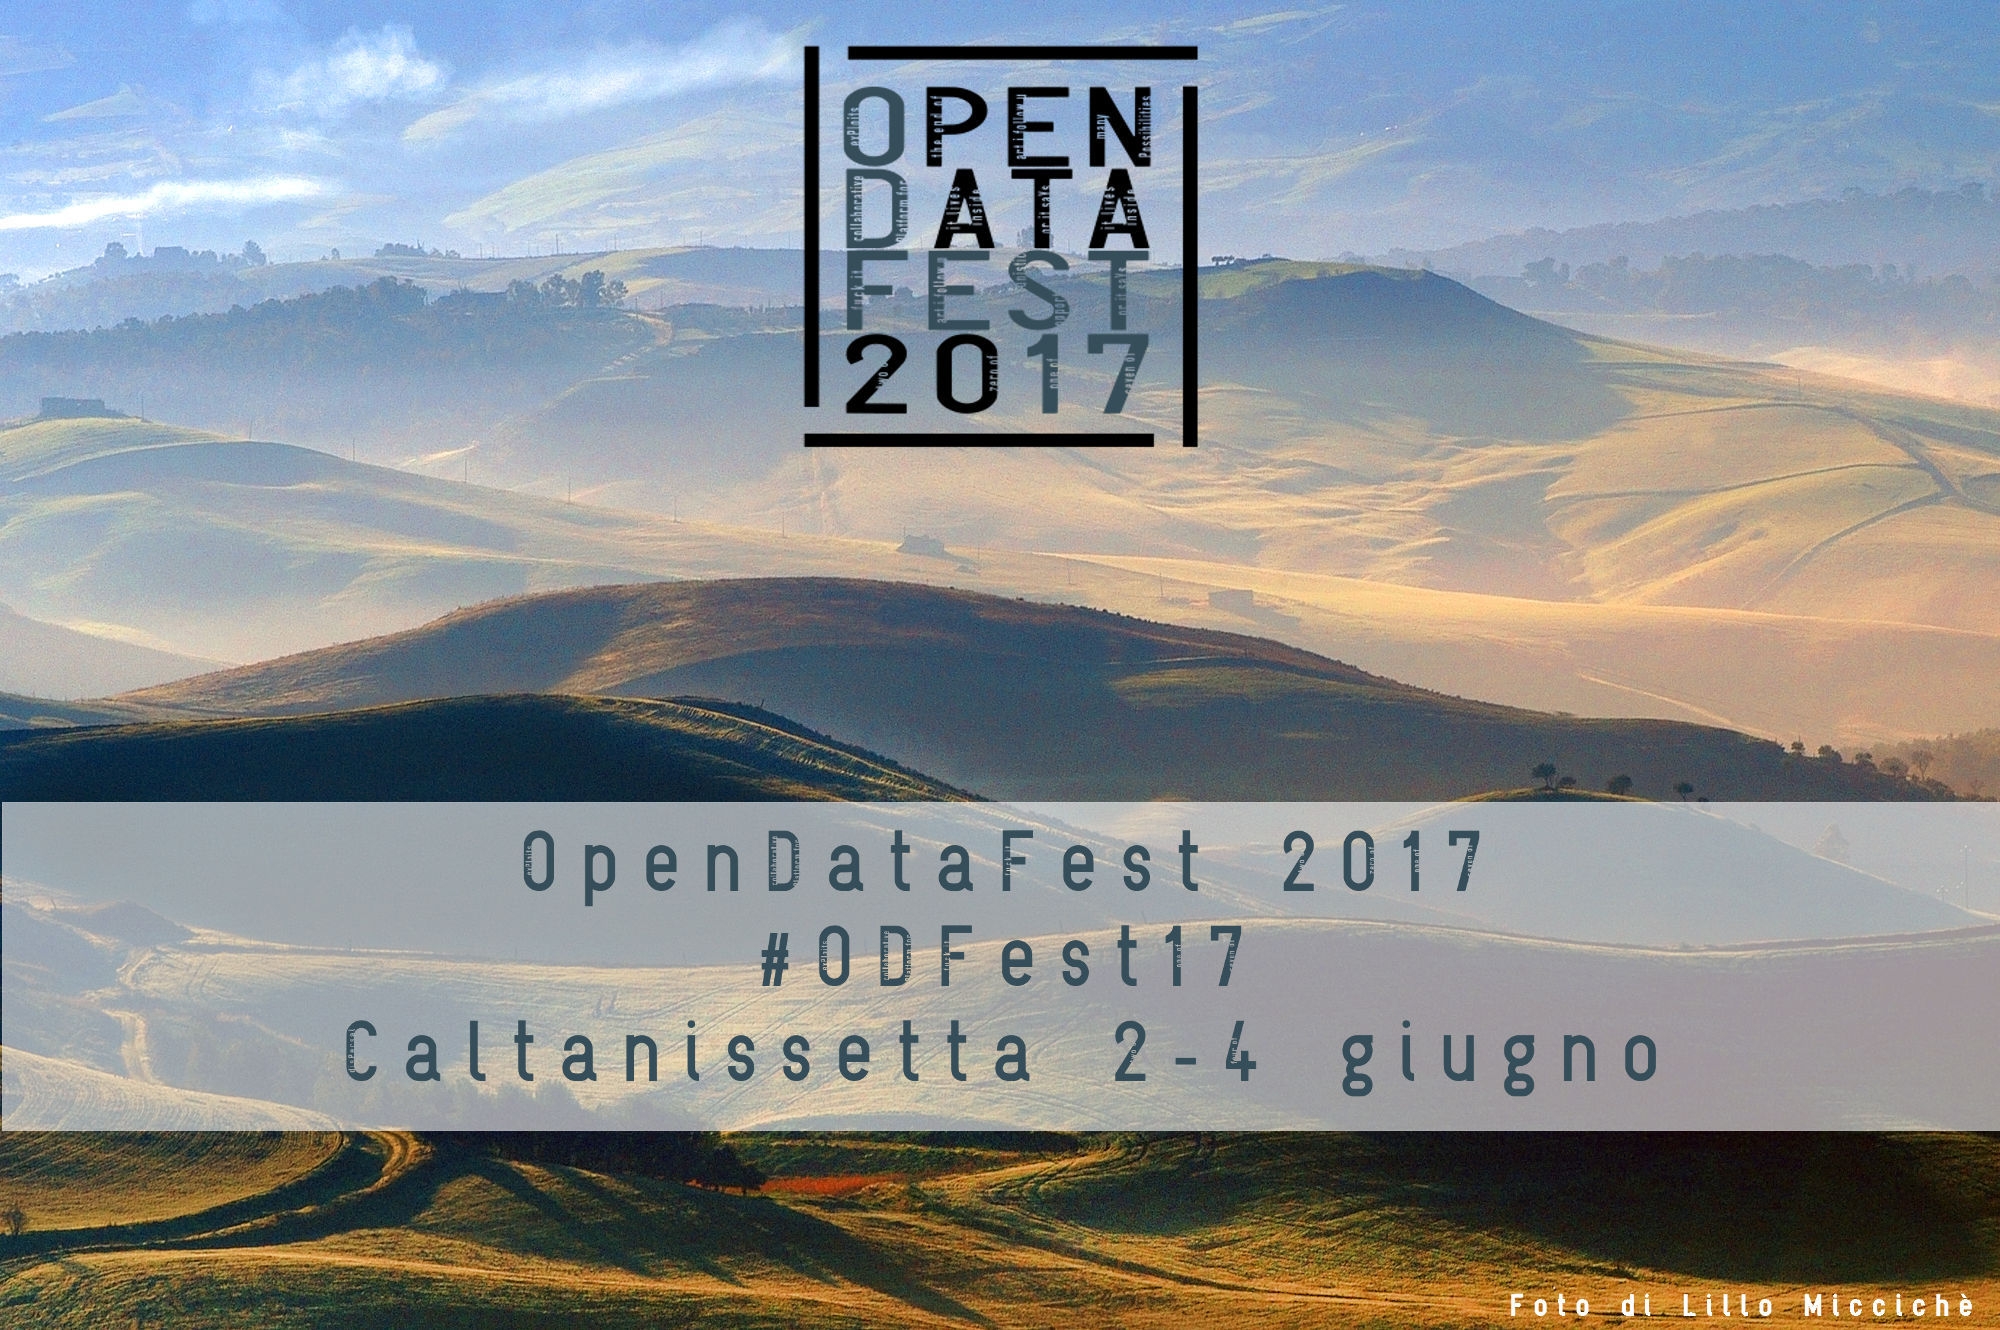 OPENDATAFEST 2017, Caltanissetta 2-4 giugno 2017, #ODFest17